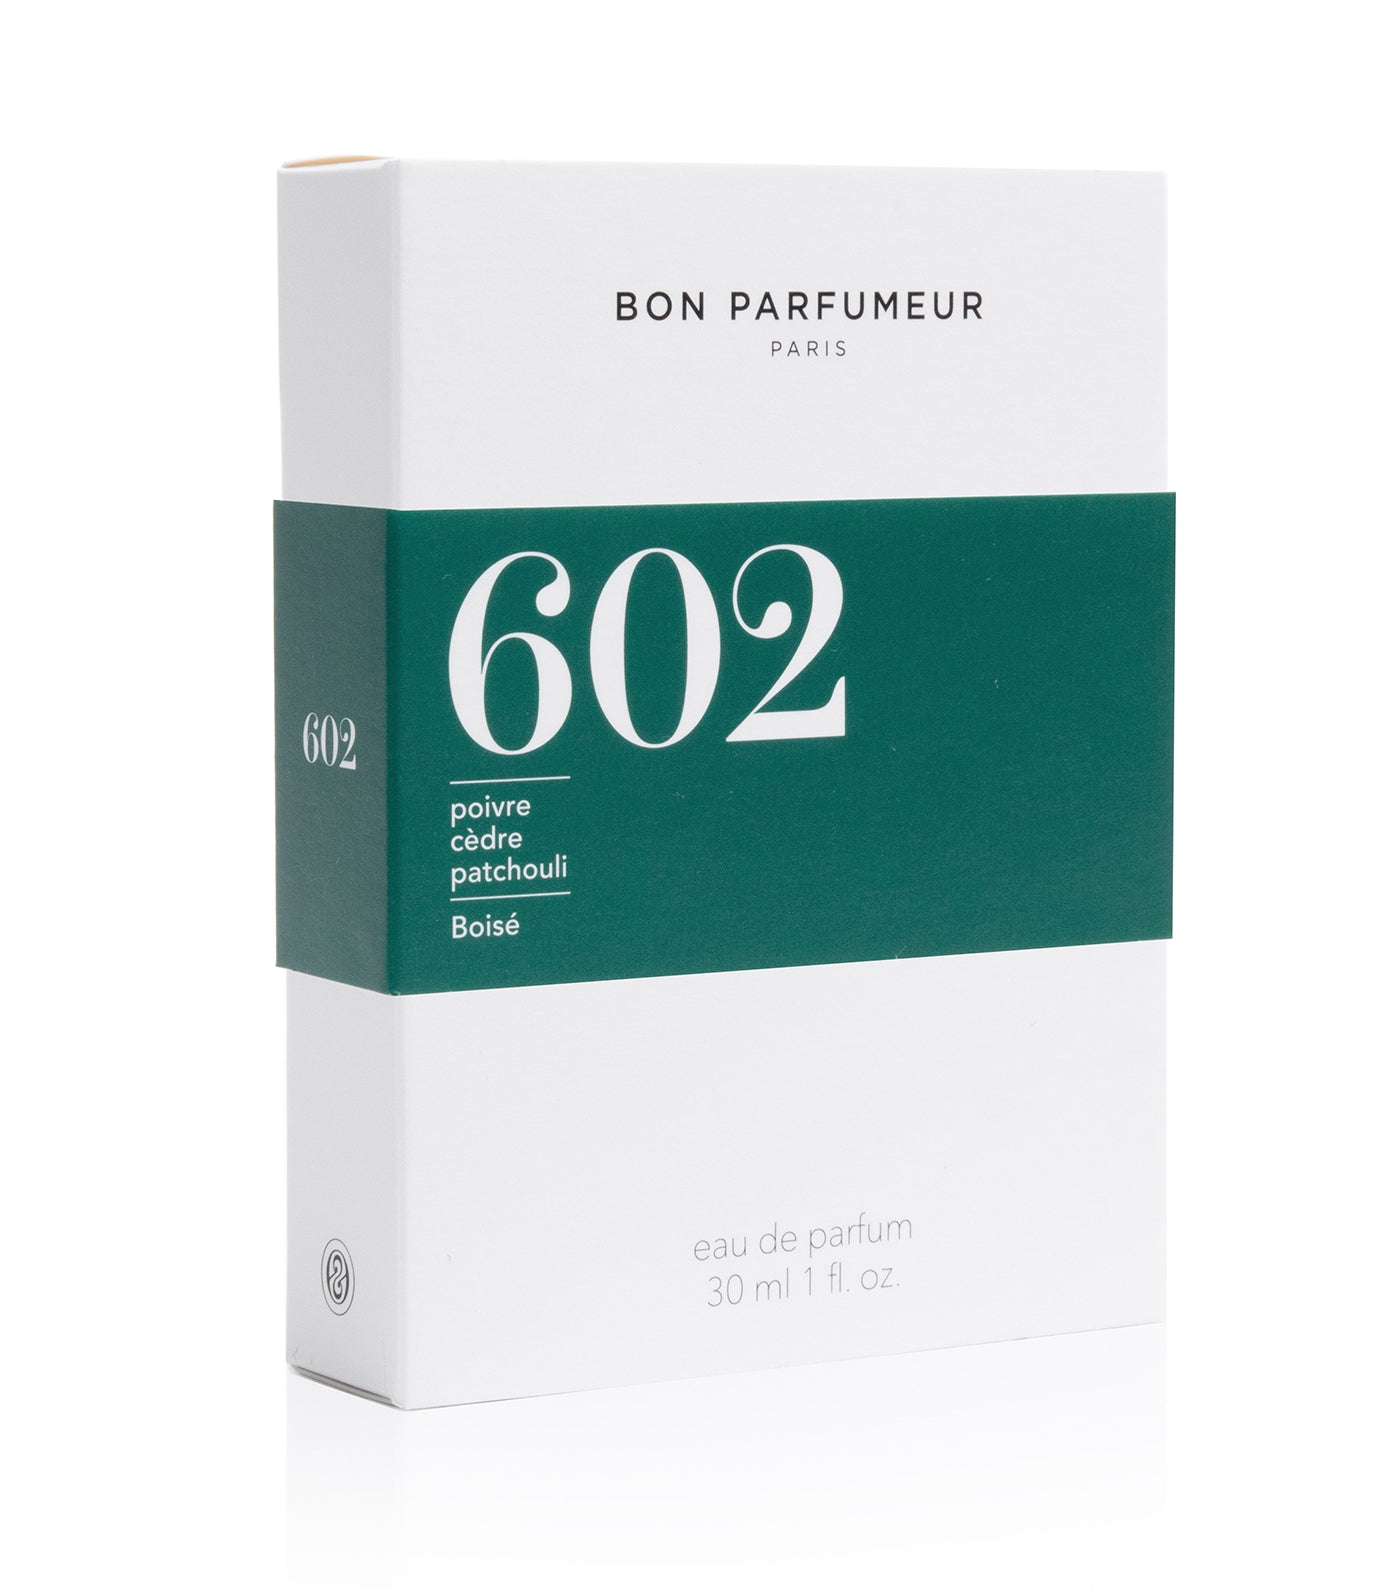 Eau de parfum 602 : pepper, cedar and patchouli